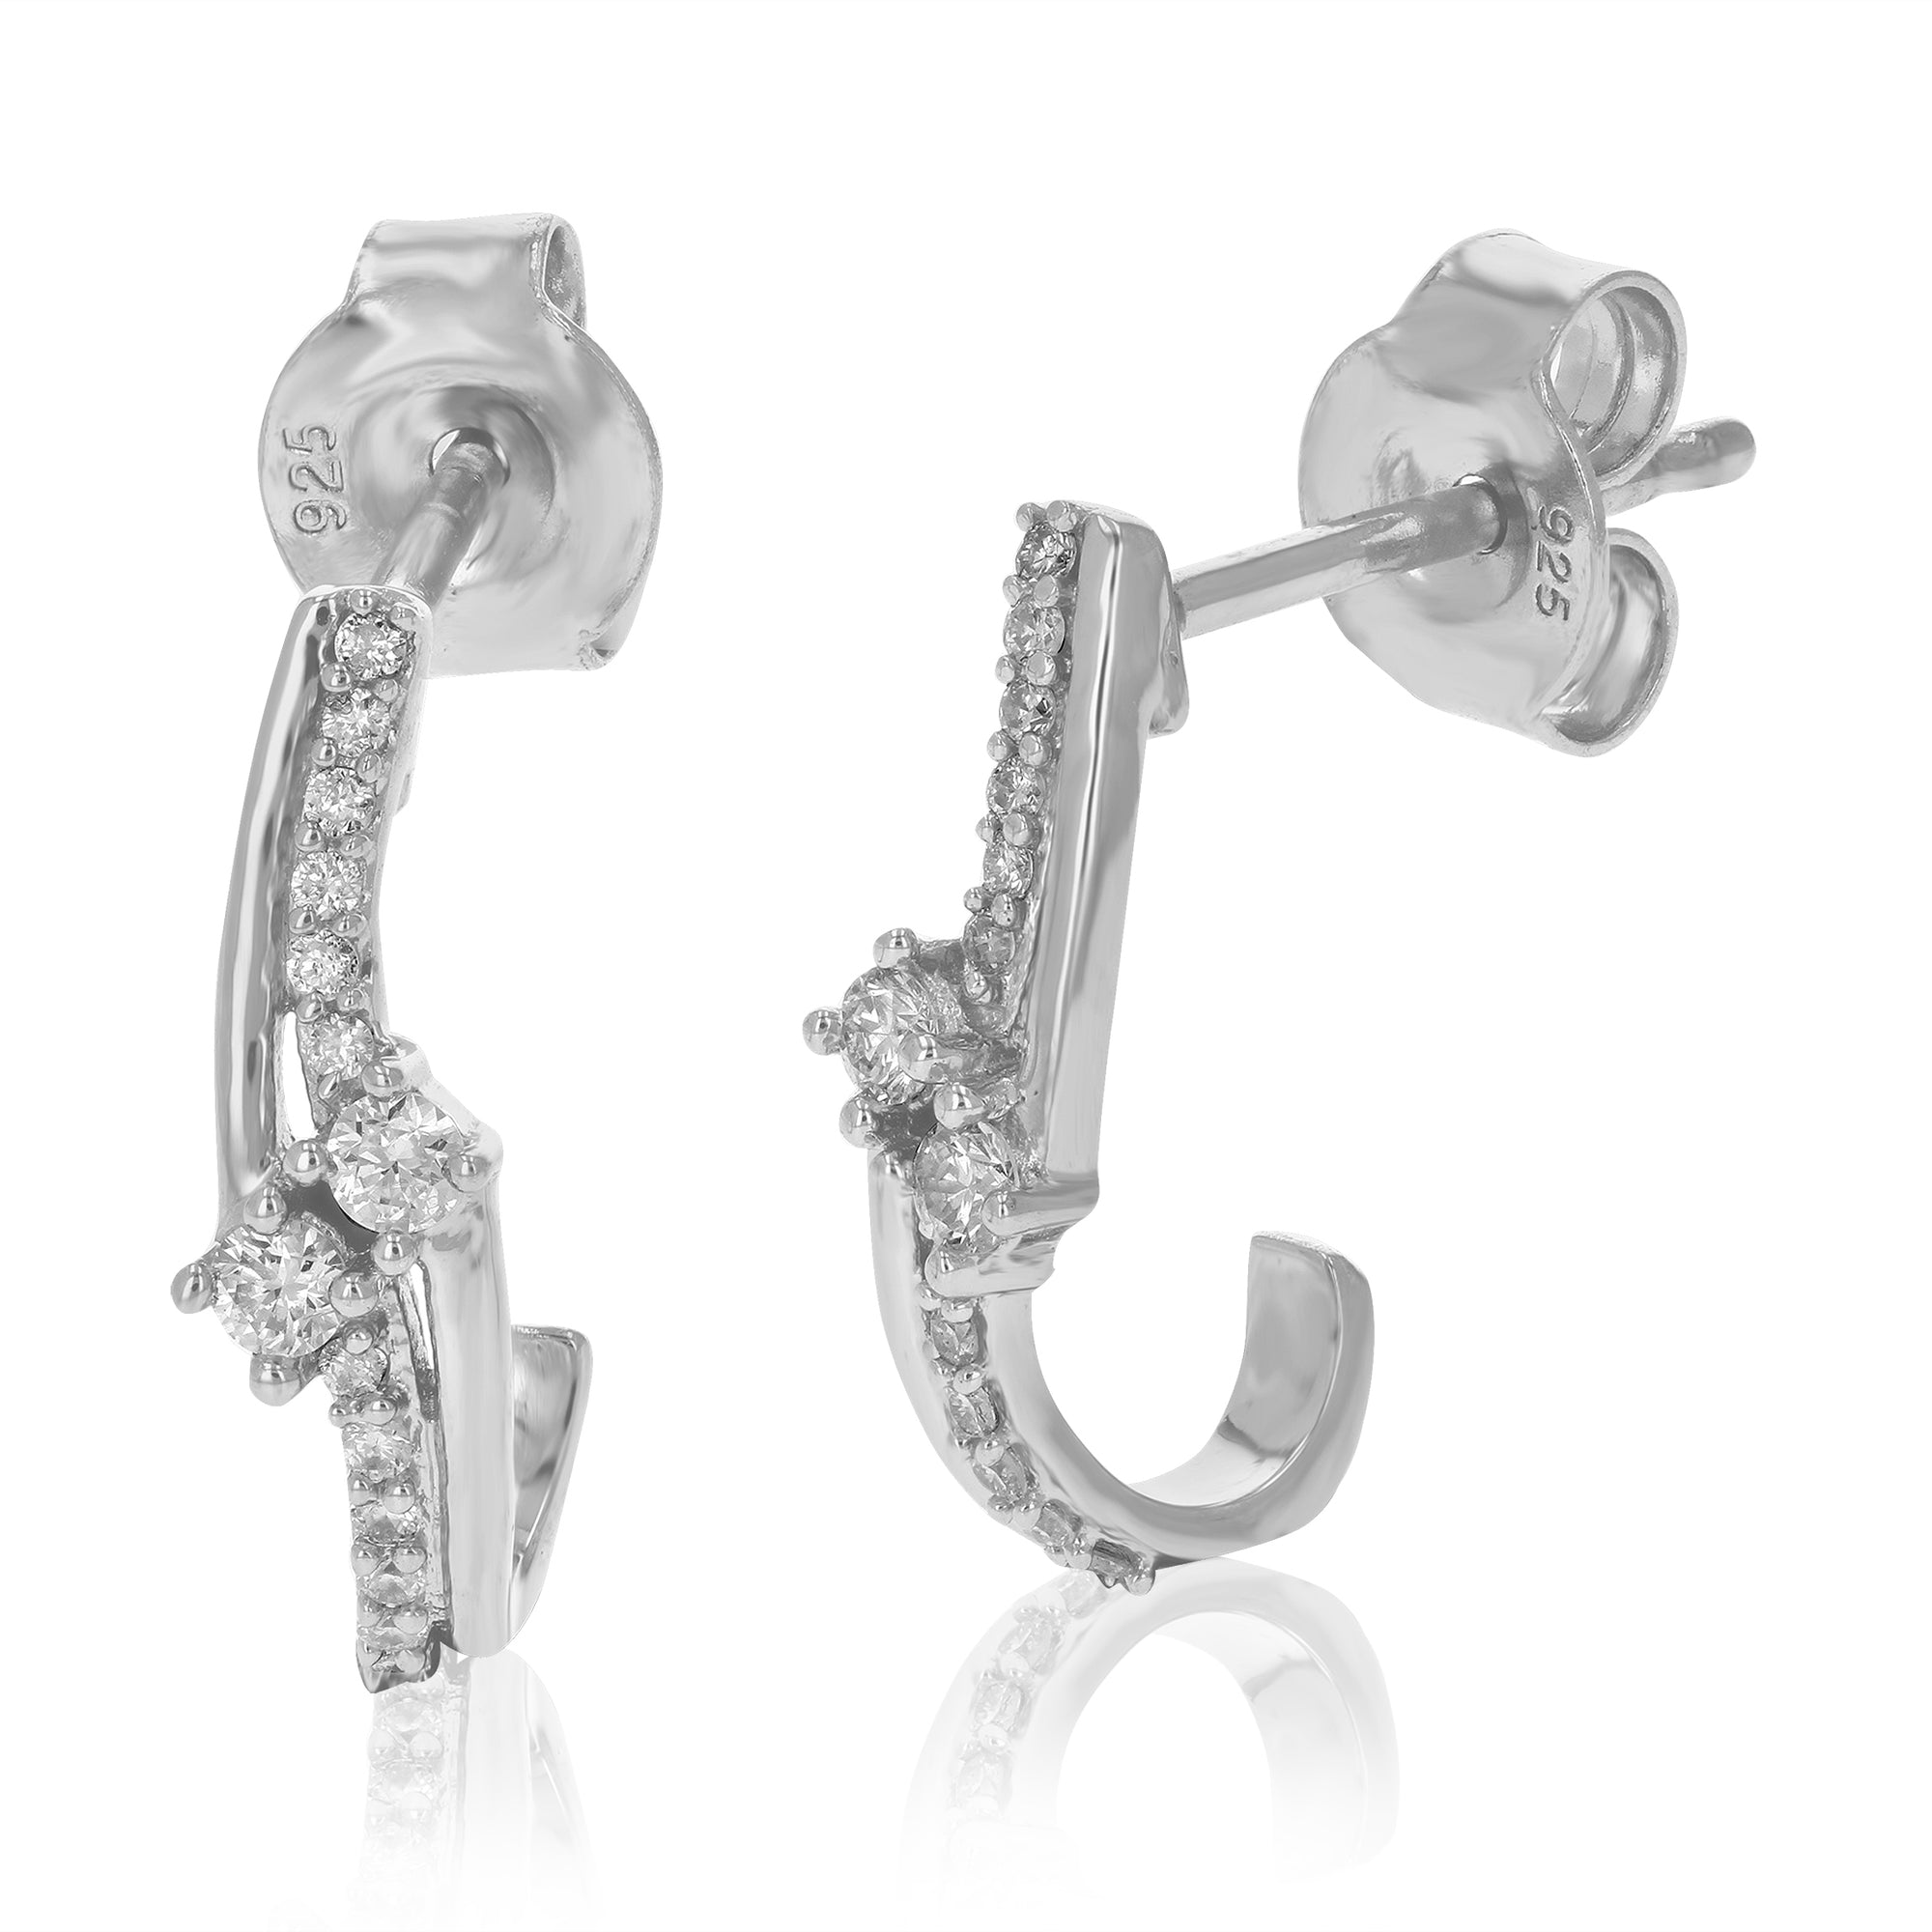 1/6 cttw Dangle Earrings for Women, Round Lab Grown Diamond Dangle Earrings in .925 Sterling Silver, Prong Setting, 1/2 Inch